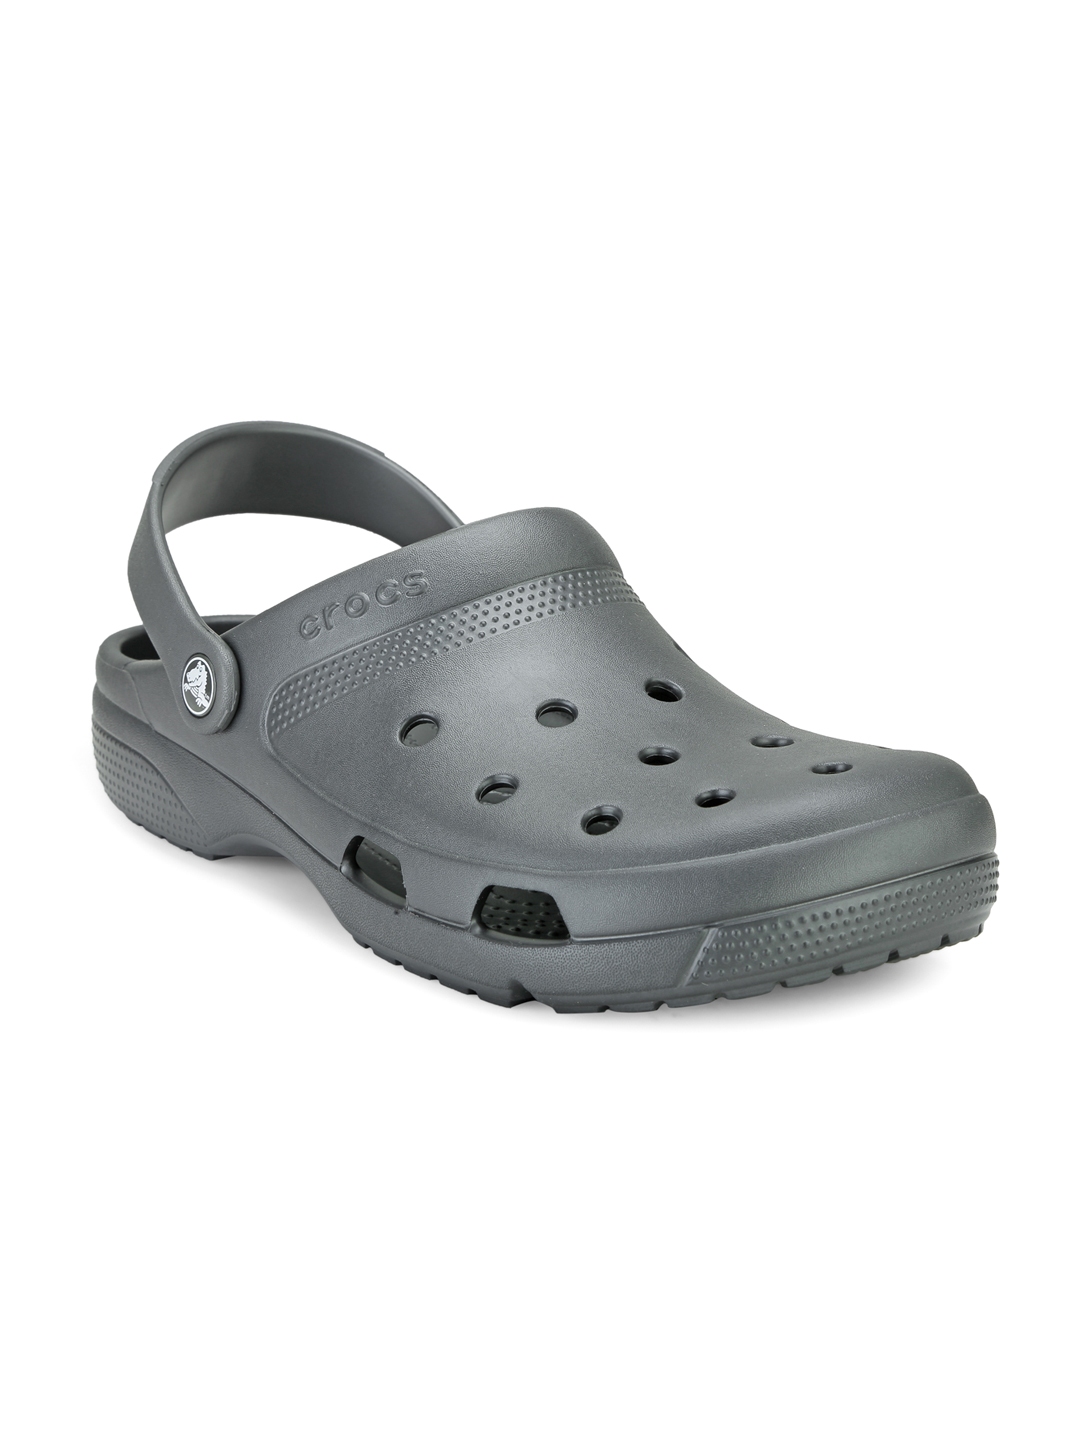 gray crocs